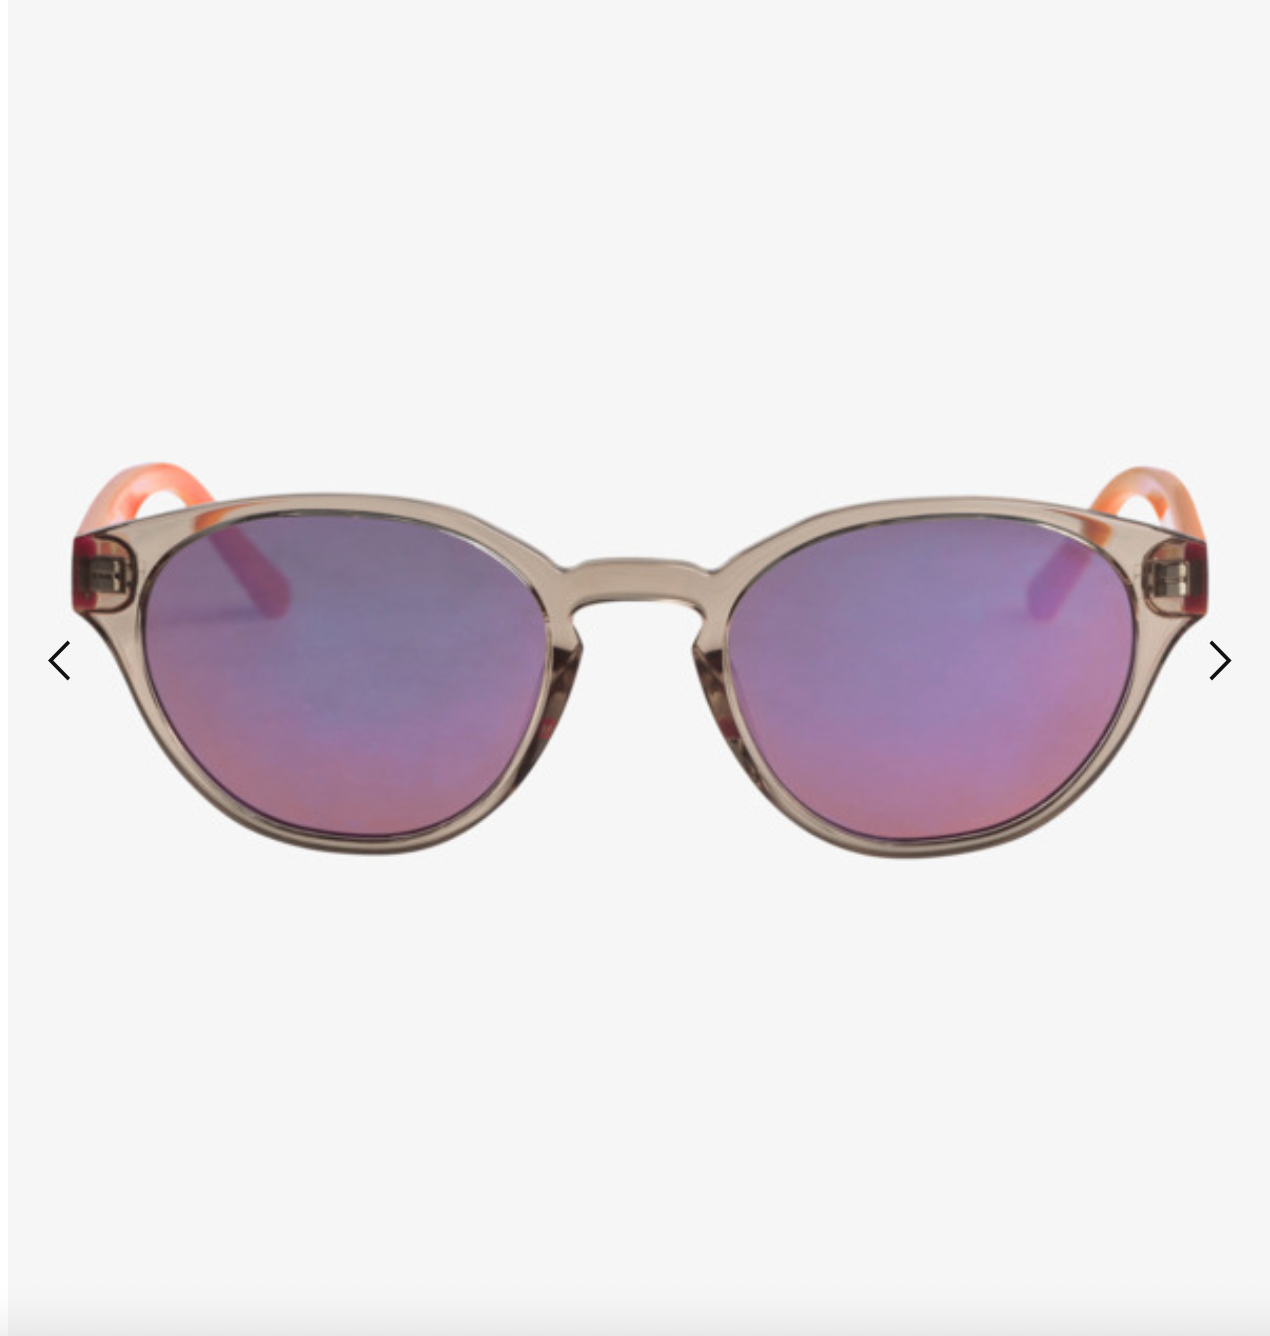 ROXY Lilou - Sunglasses for Girls